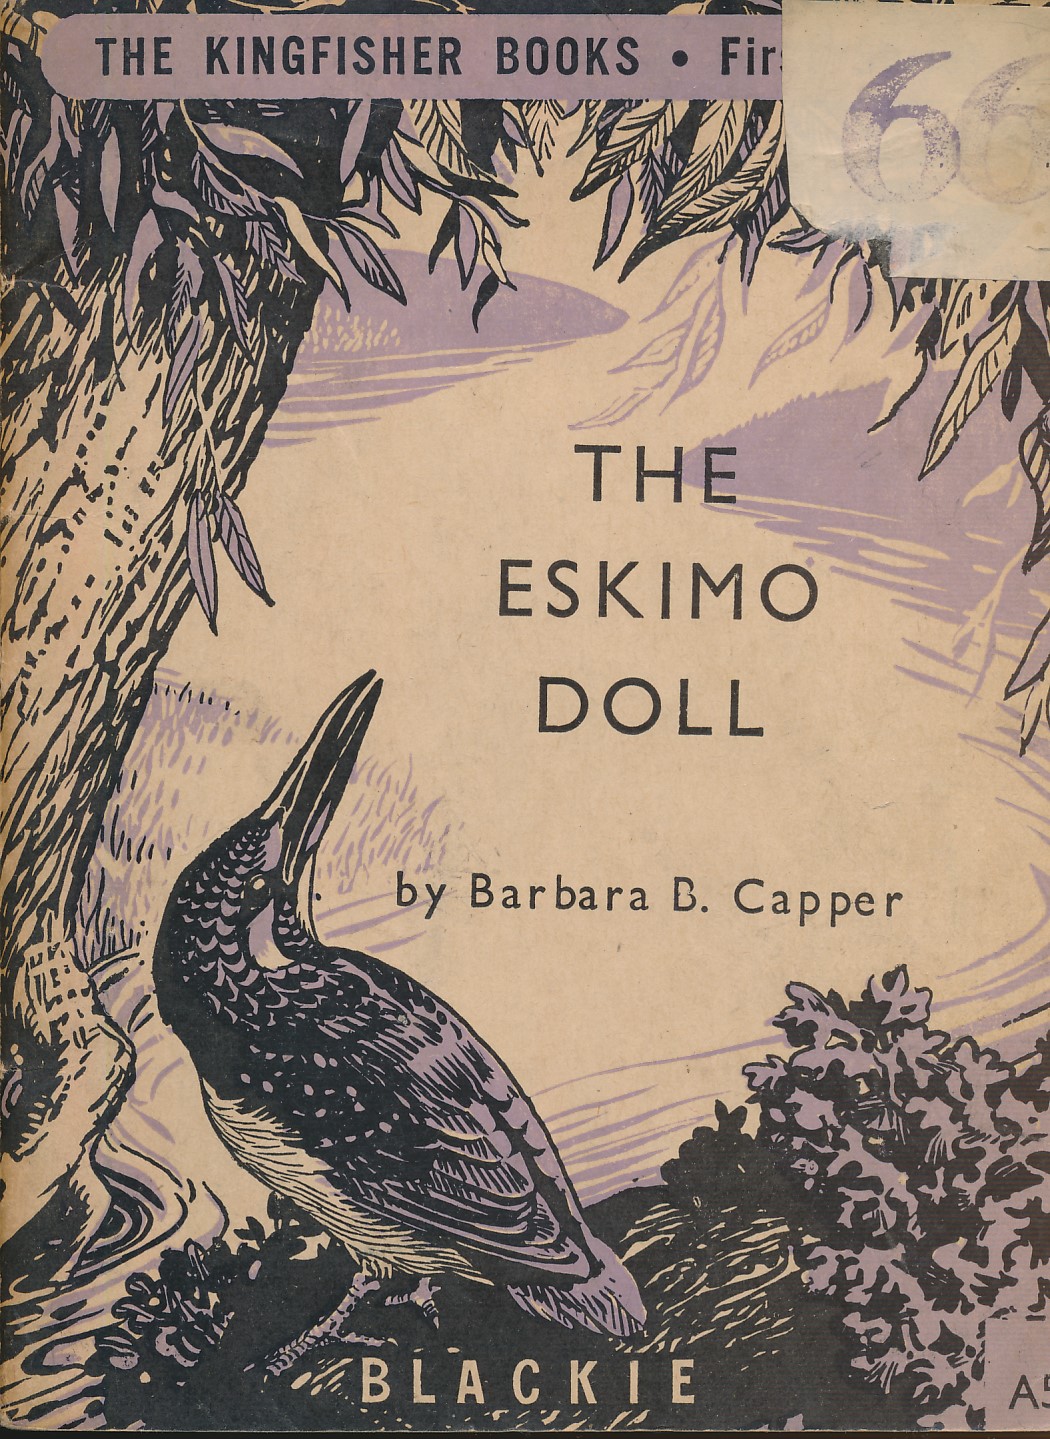 The Eskimo Doll